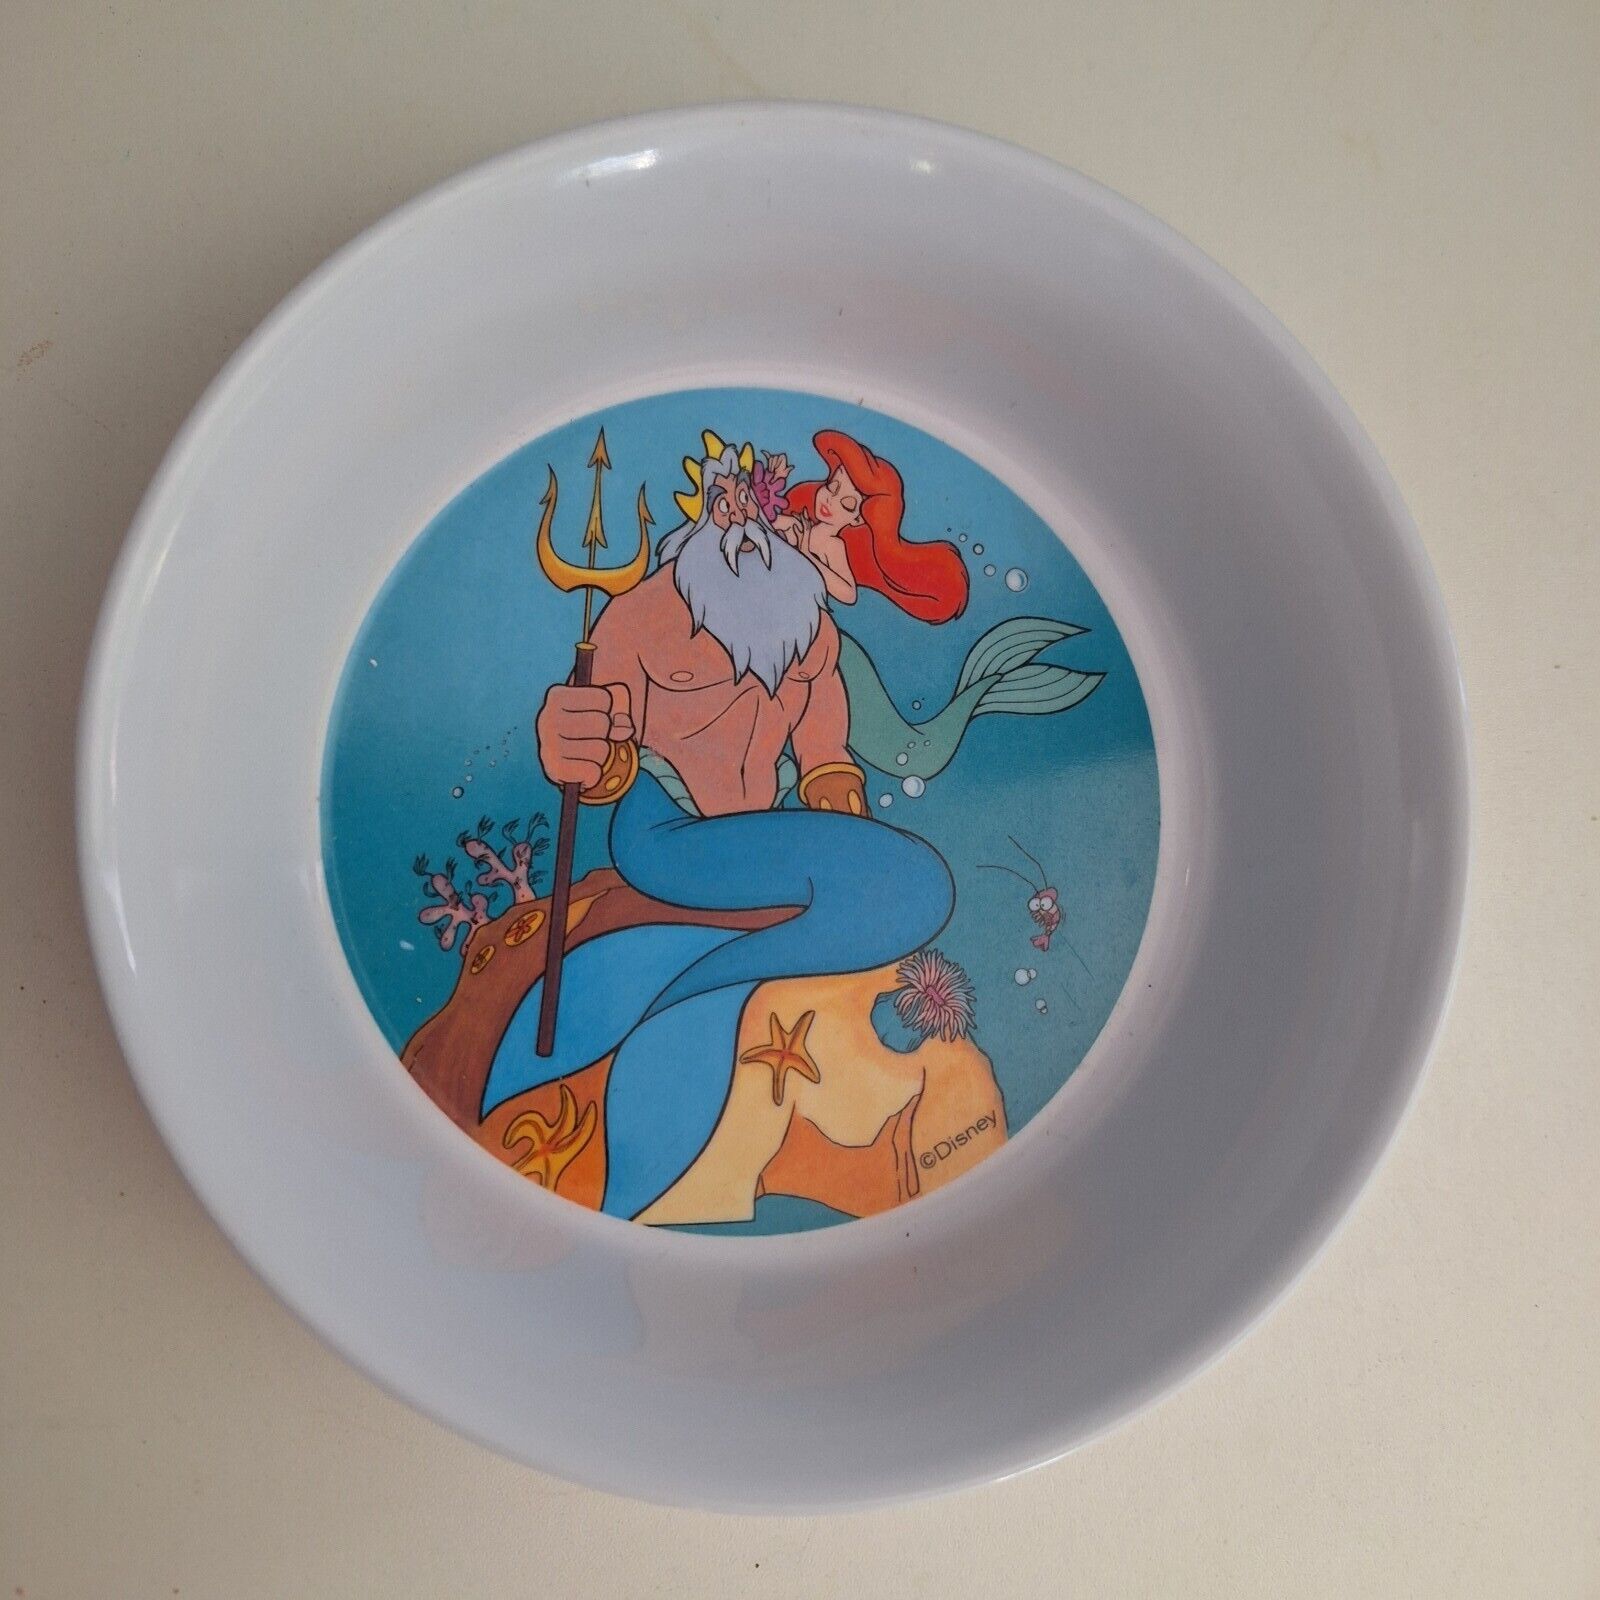 Vintage Disney The Little Mermaid Zak Designs Cereal Bowl Melamine 1990s Vibrant